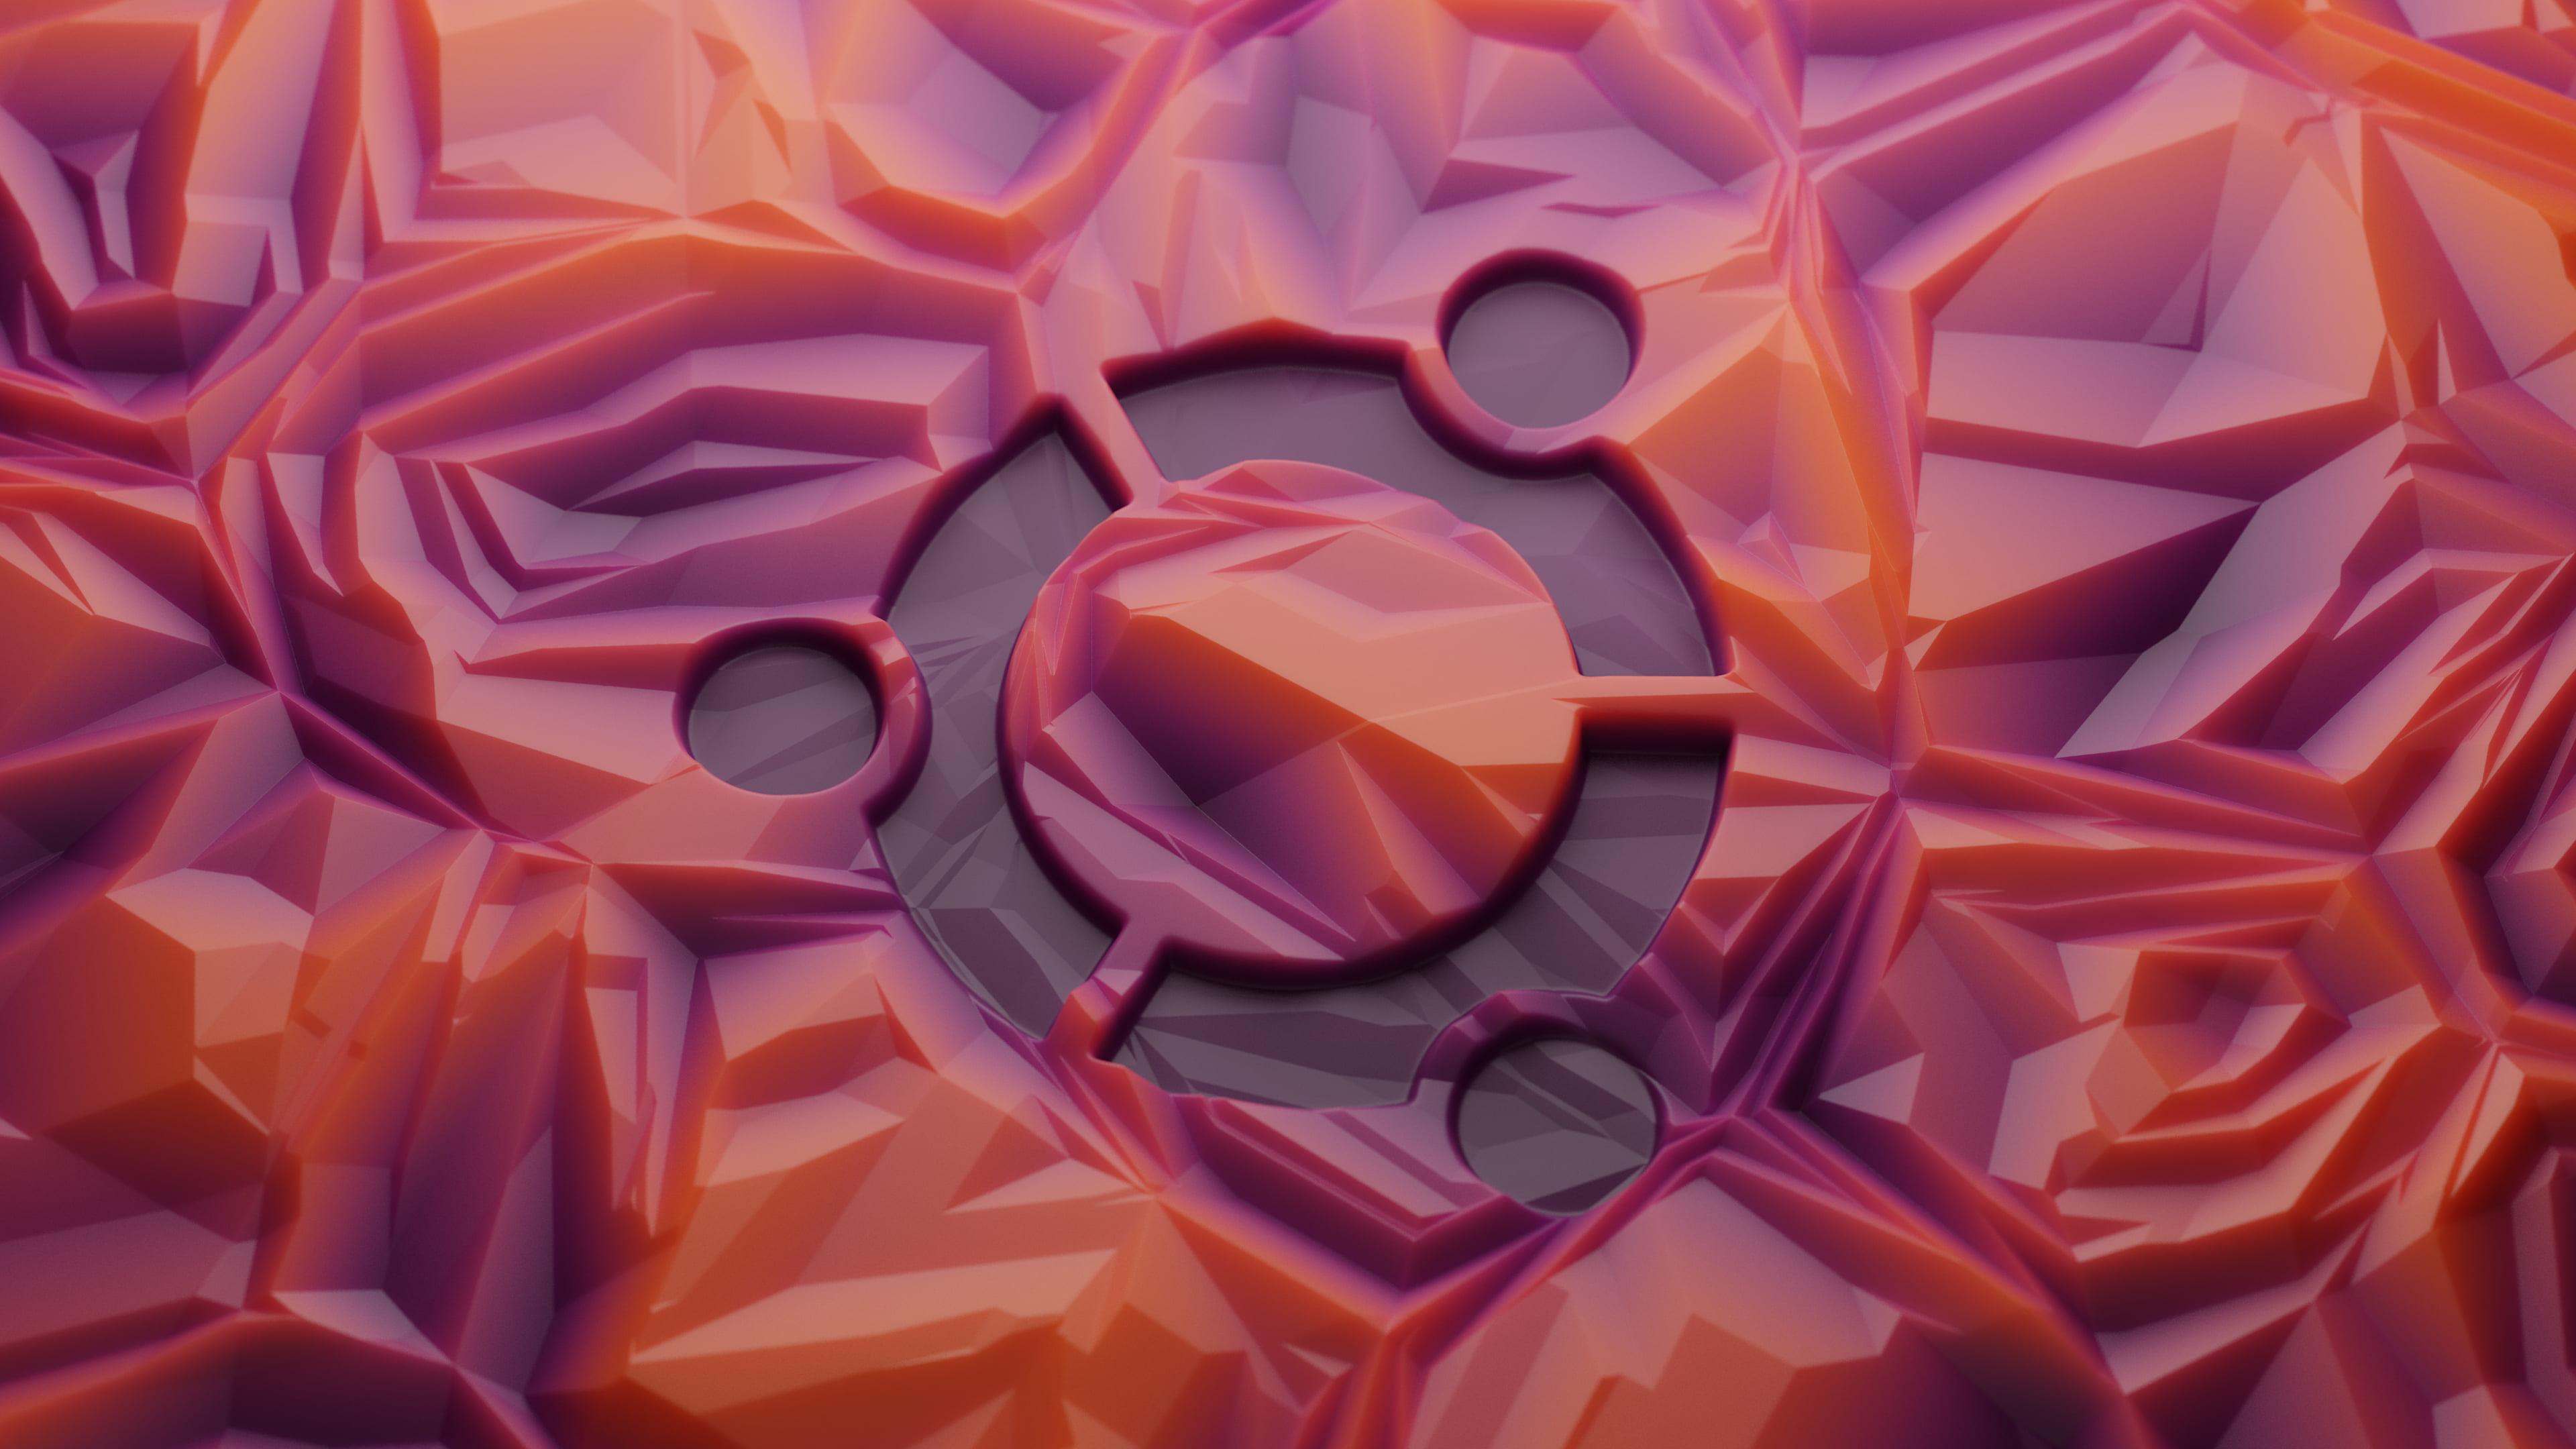 Ubuntu gel by Midge Mantissa Sinnaeve